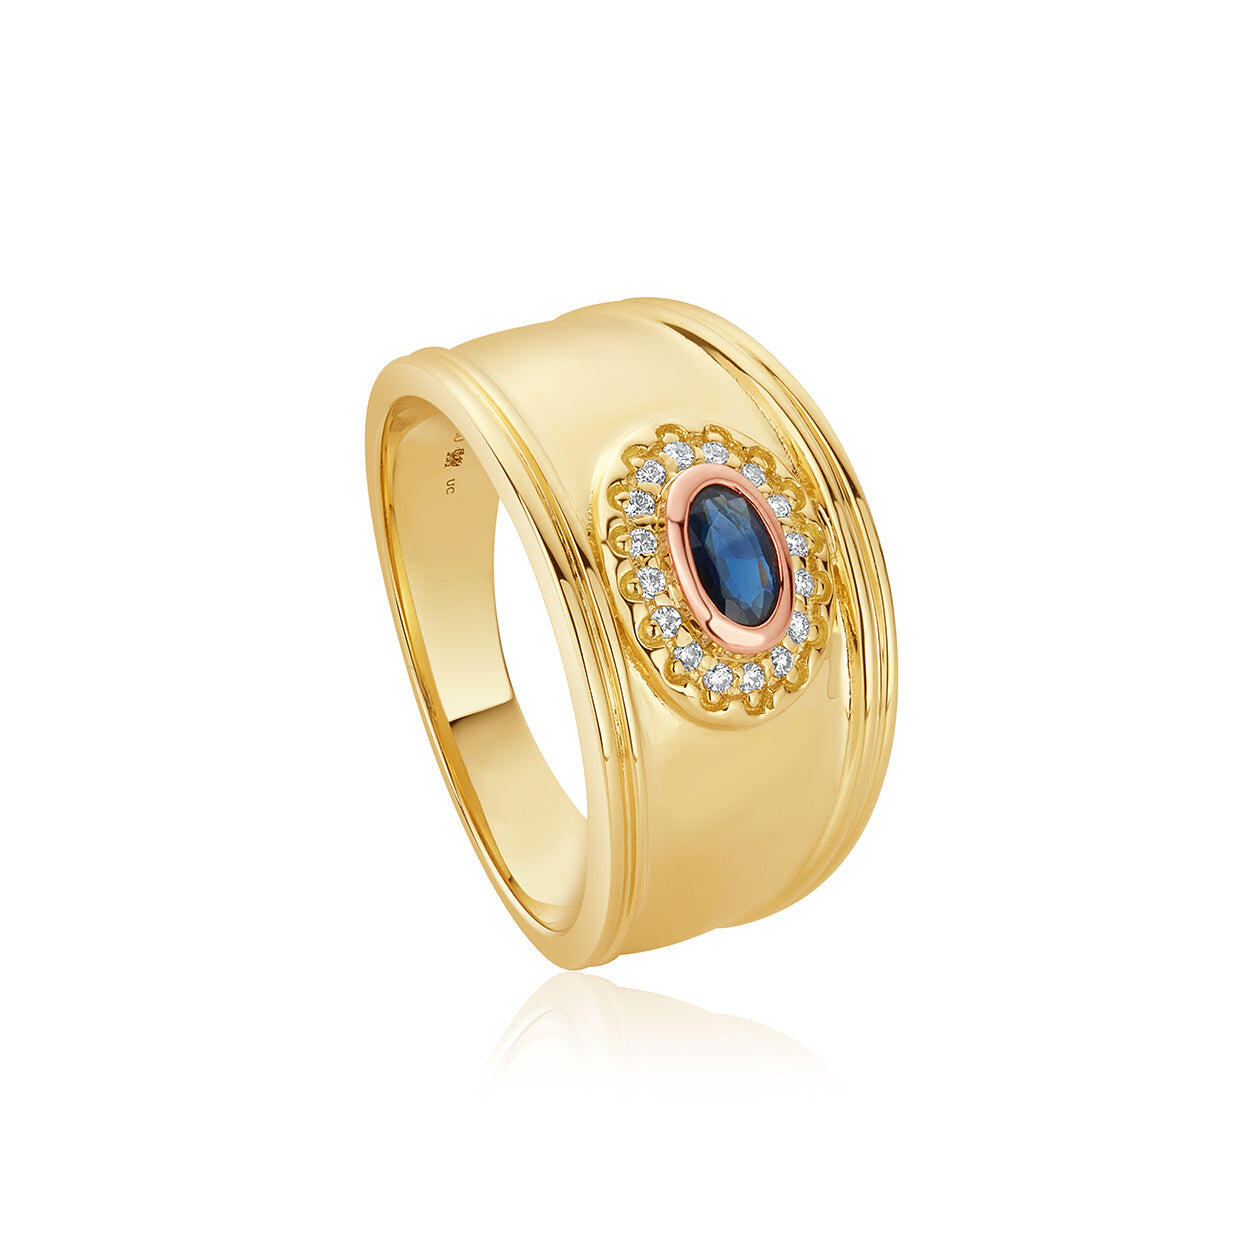 Clogau Princess Diana Sapphire Diamond 9ct Gold Ring - L